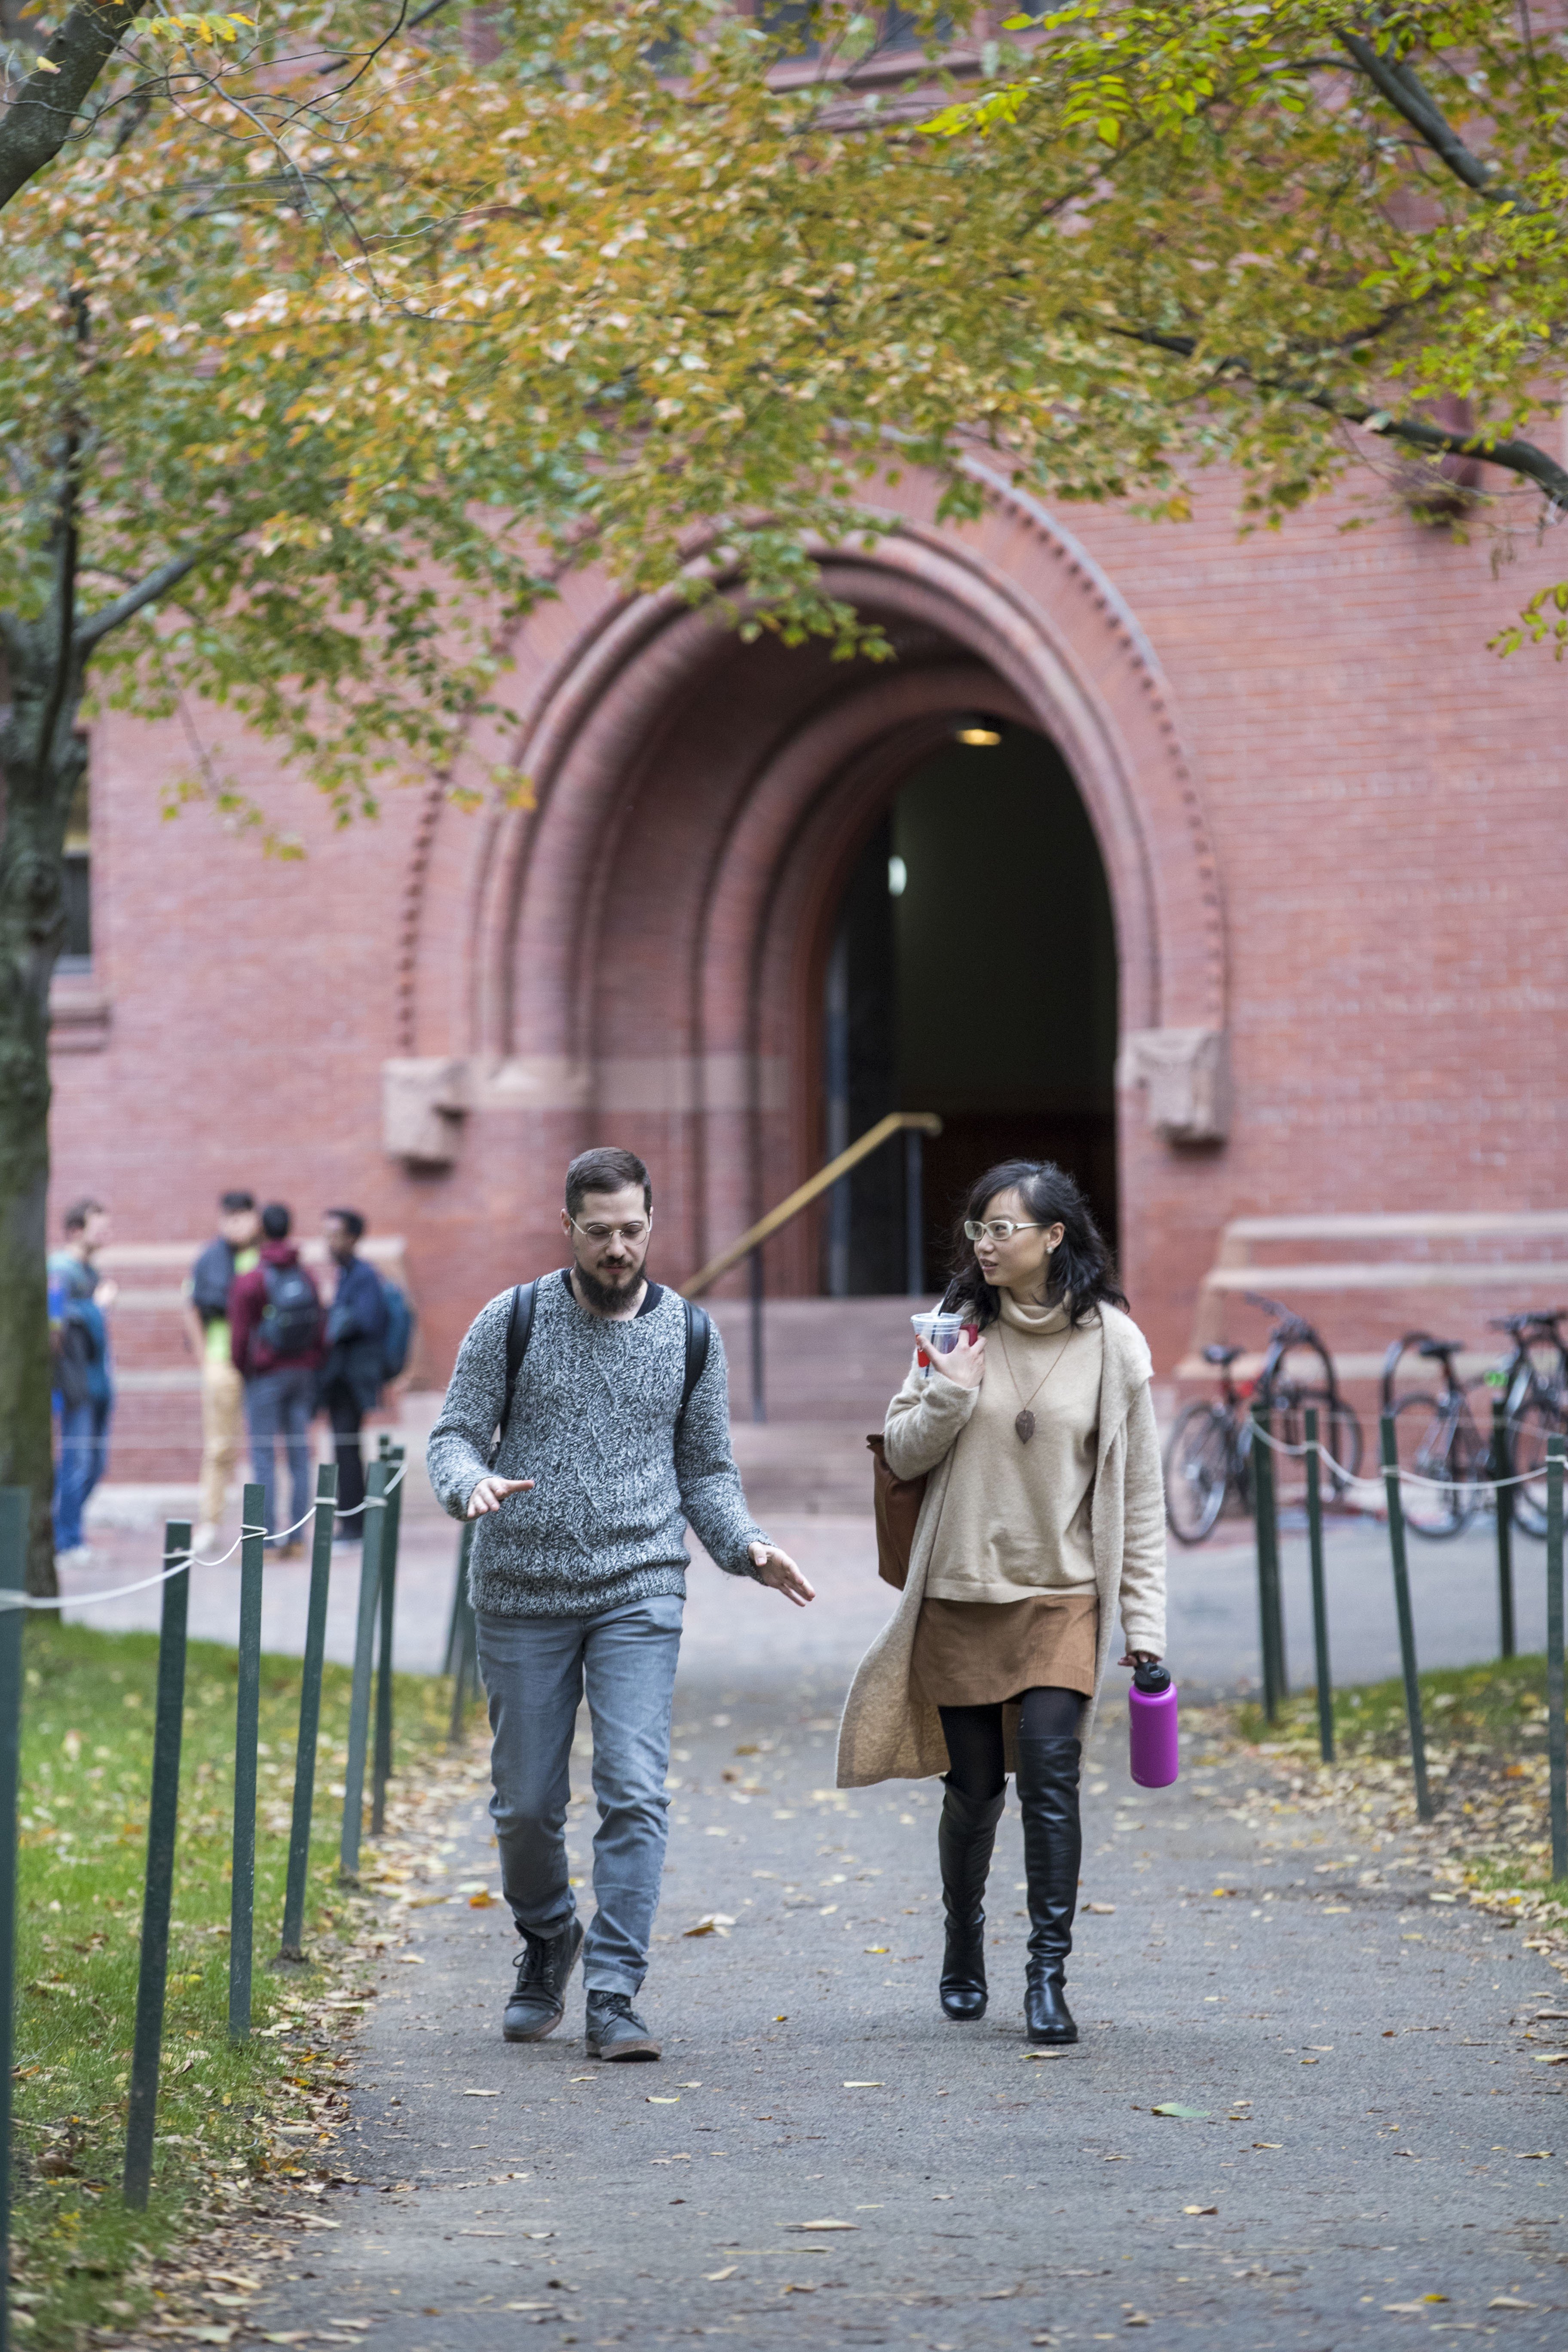 Students on campus at Harvard University. Photo: Xinhua